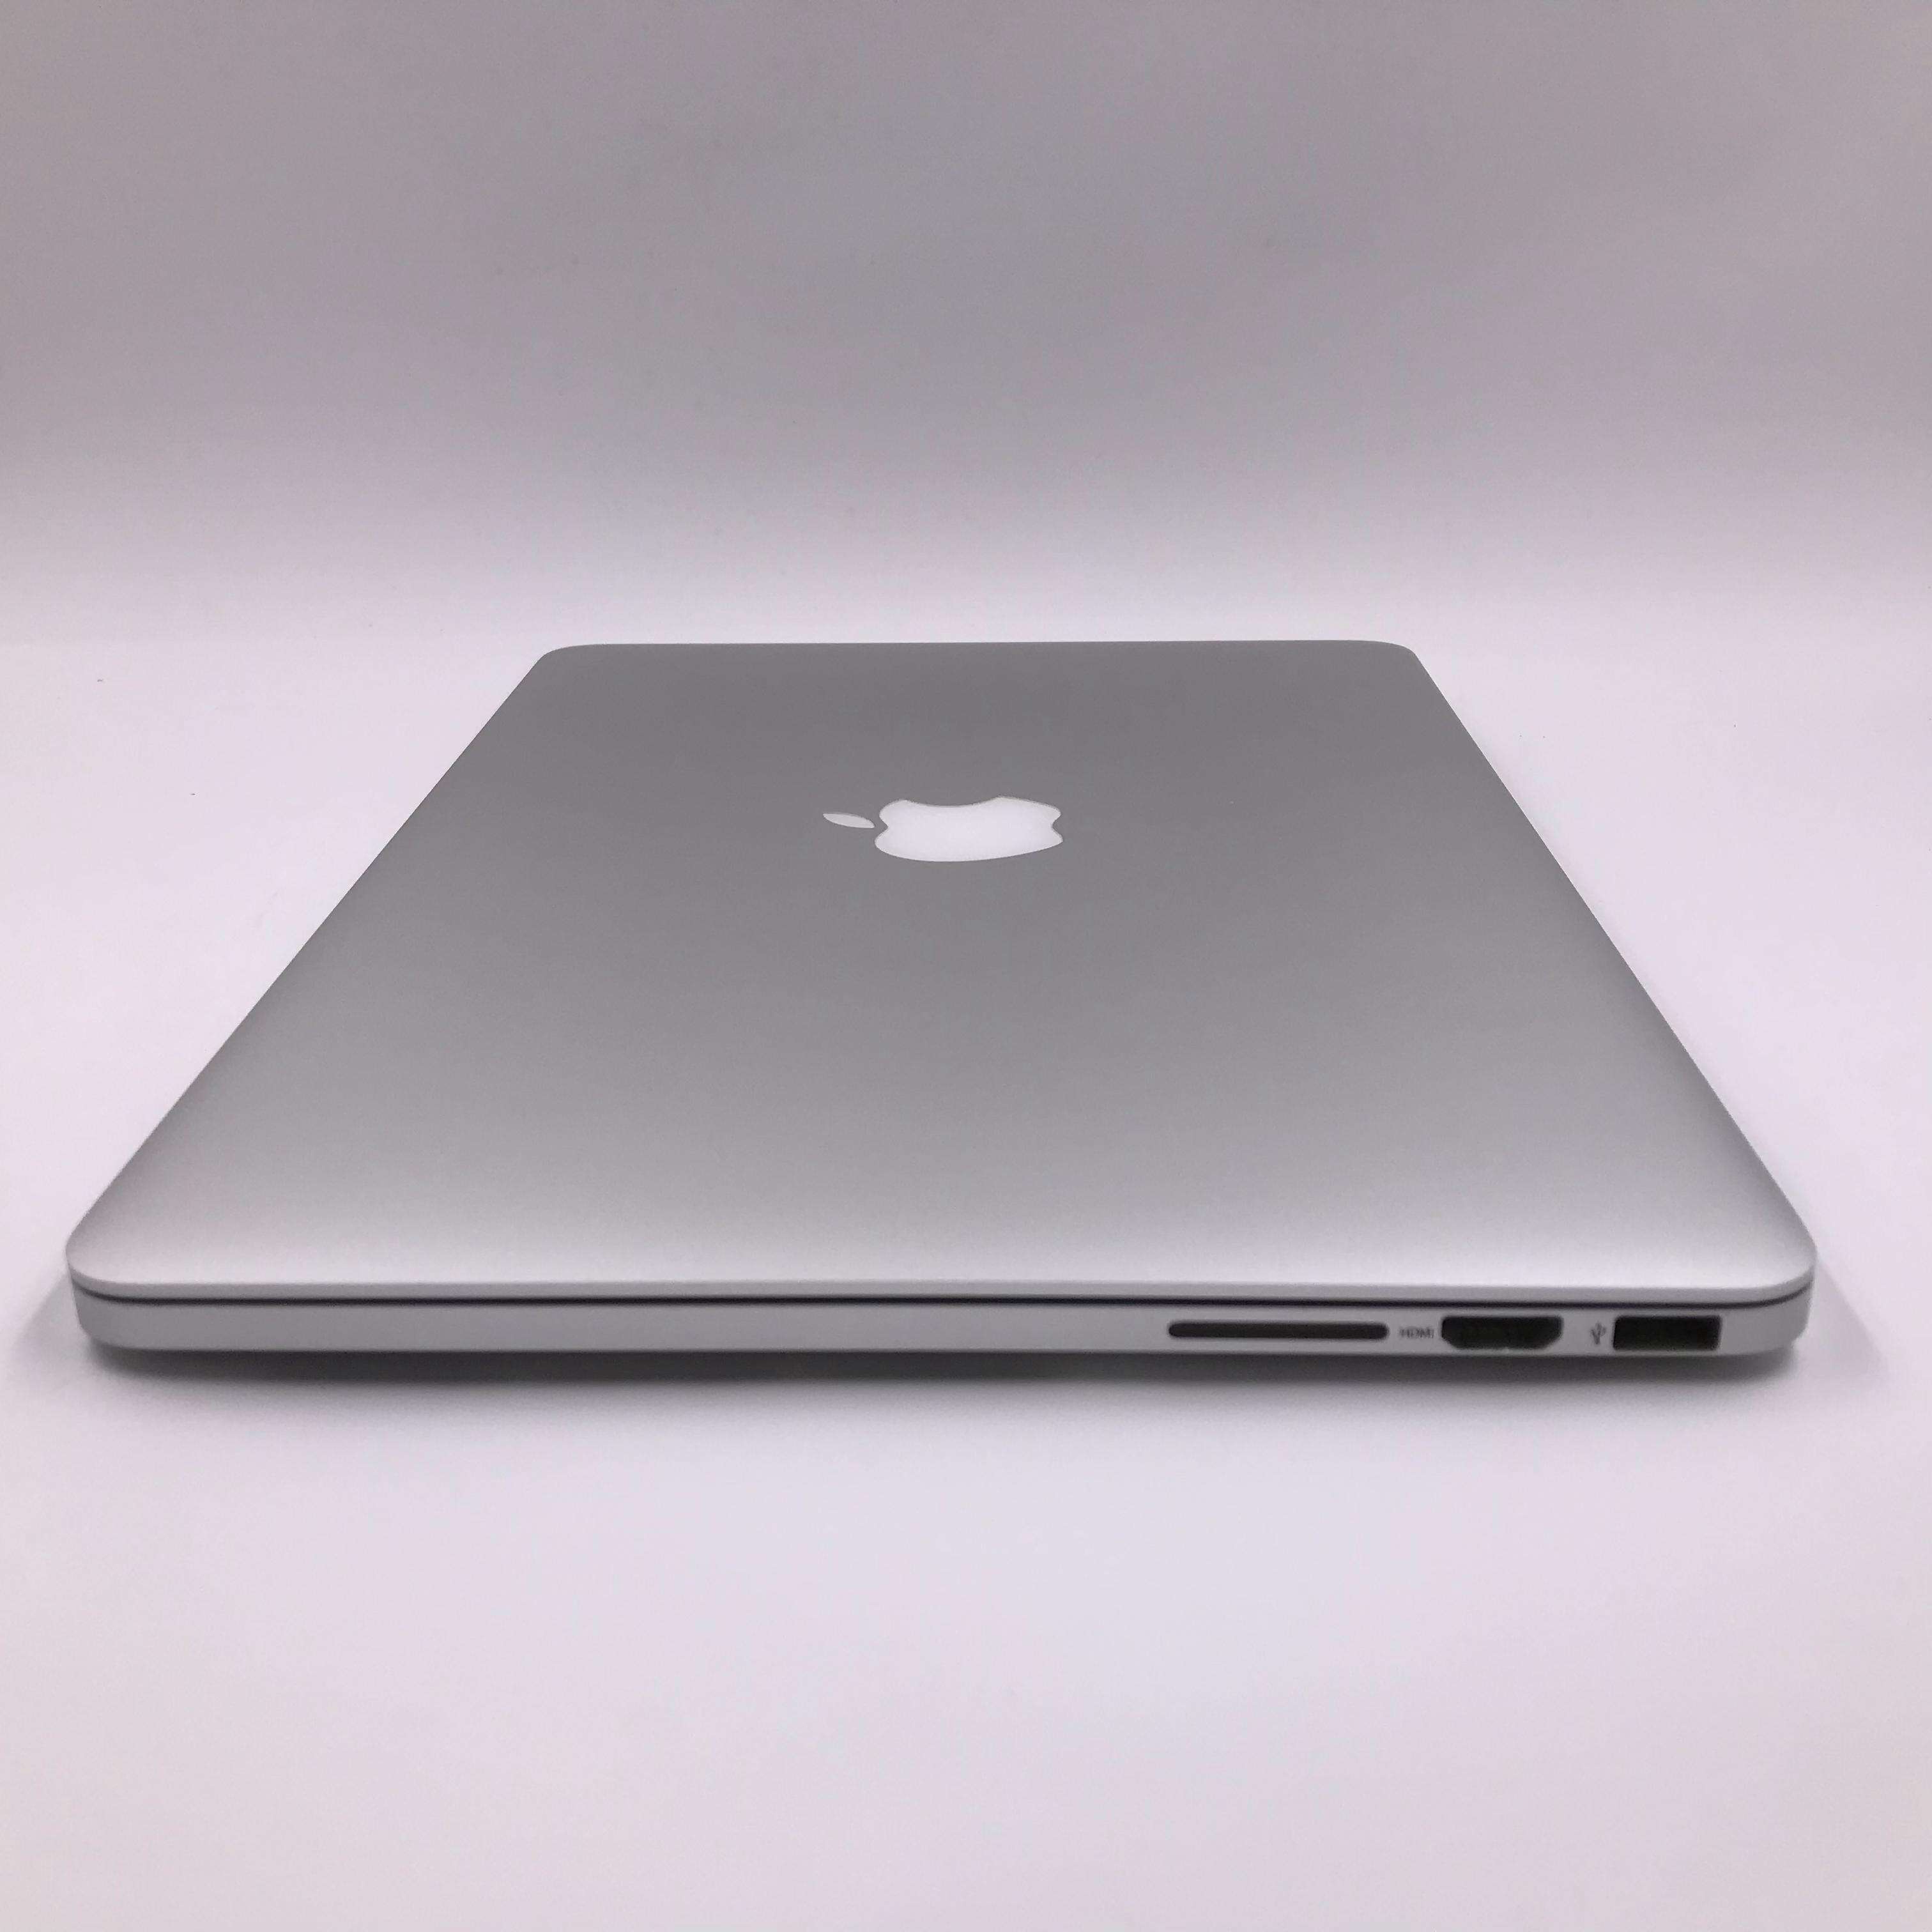 MacBook Pro (13",2013) 内存_8G/CPU_2.4 GHz Intel Core i5/硬盘_256G 港版